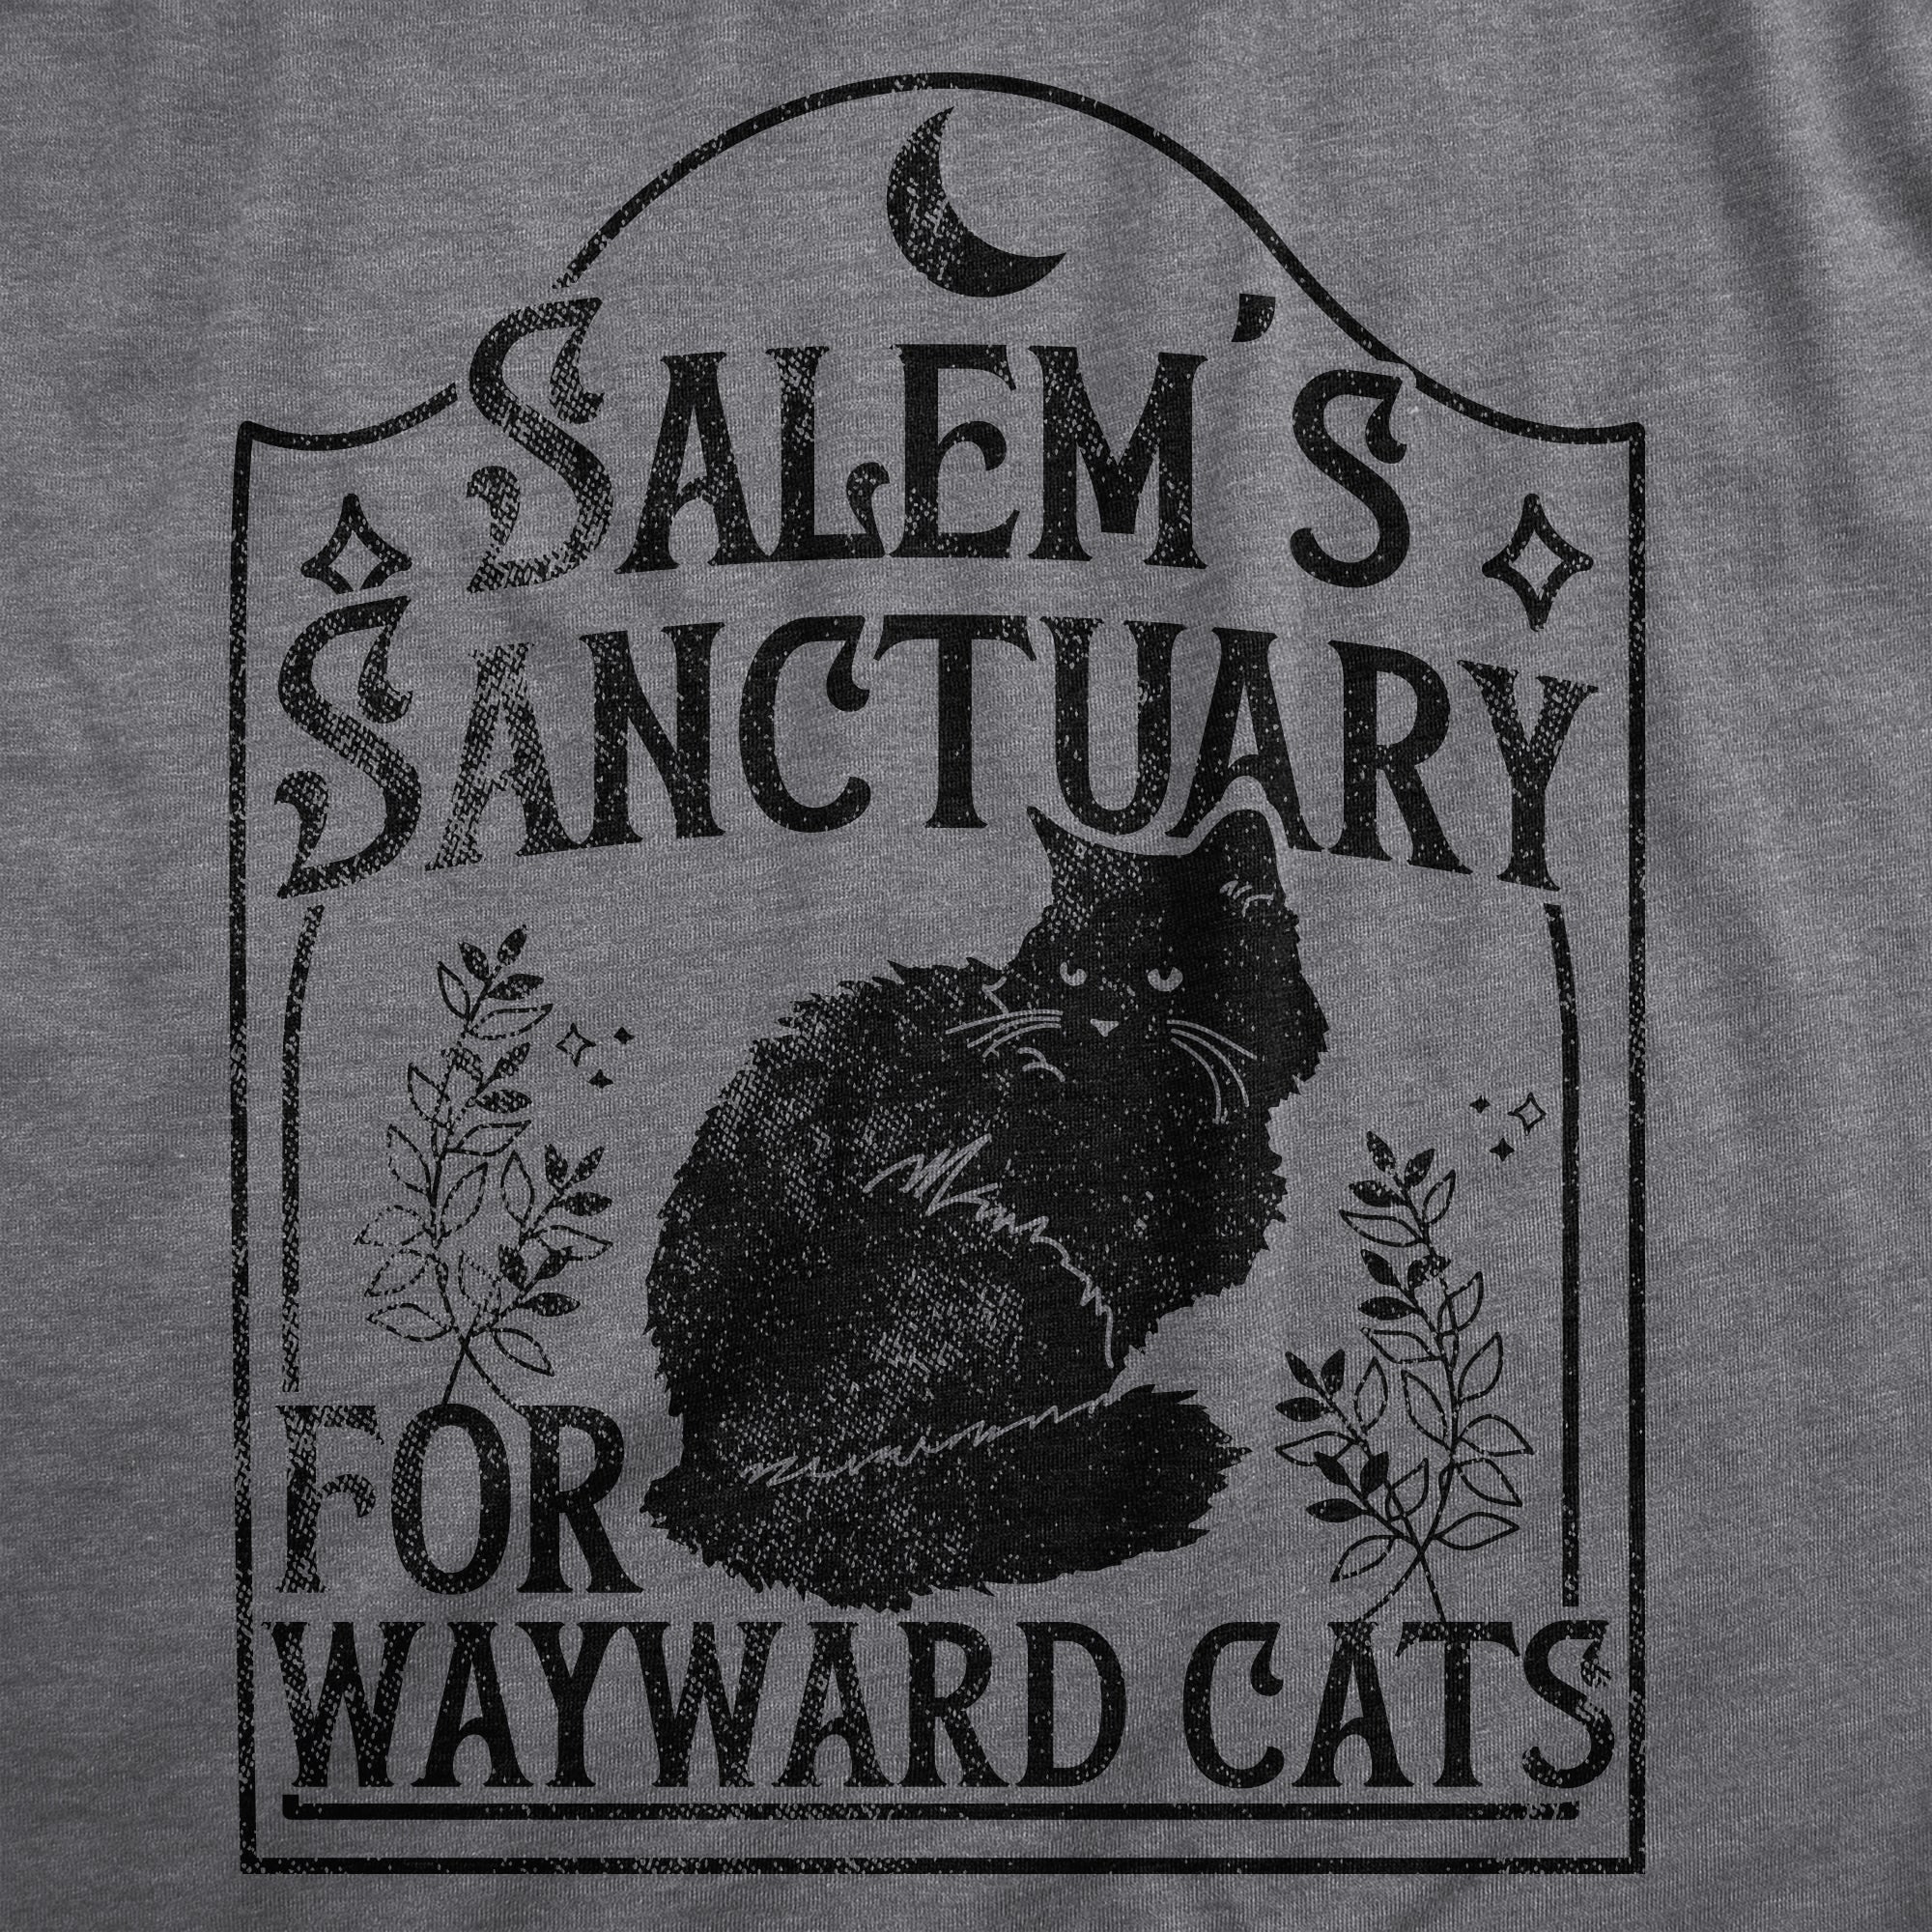 Funny Dark Heather Grey - SALEMS Salems Sanctuary For Wayward Cats Womens T Shirt Nerdy Halloween Cat Tee